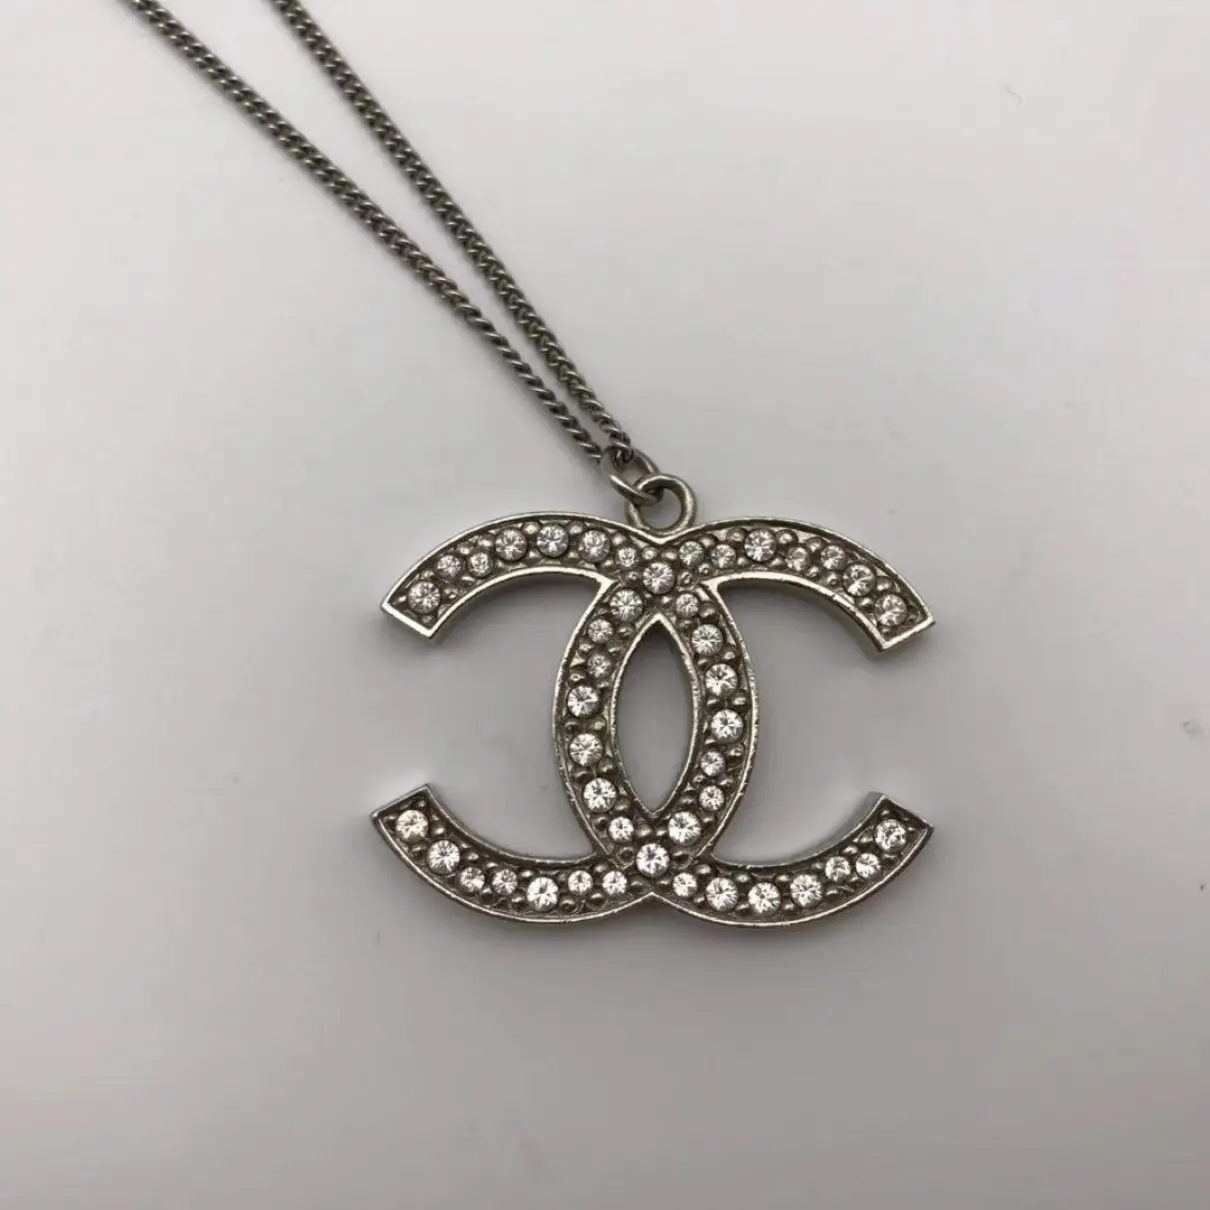 Buy Chanel CC pendant online